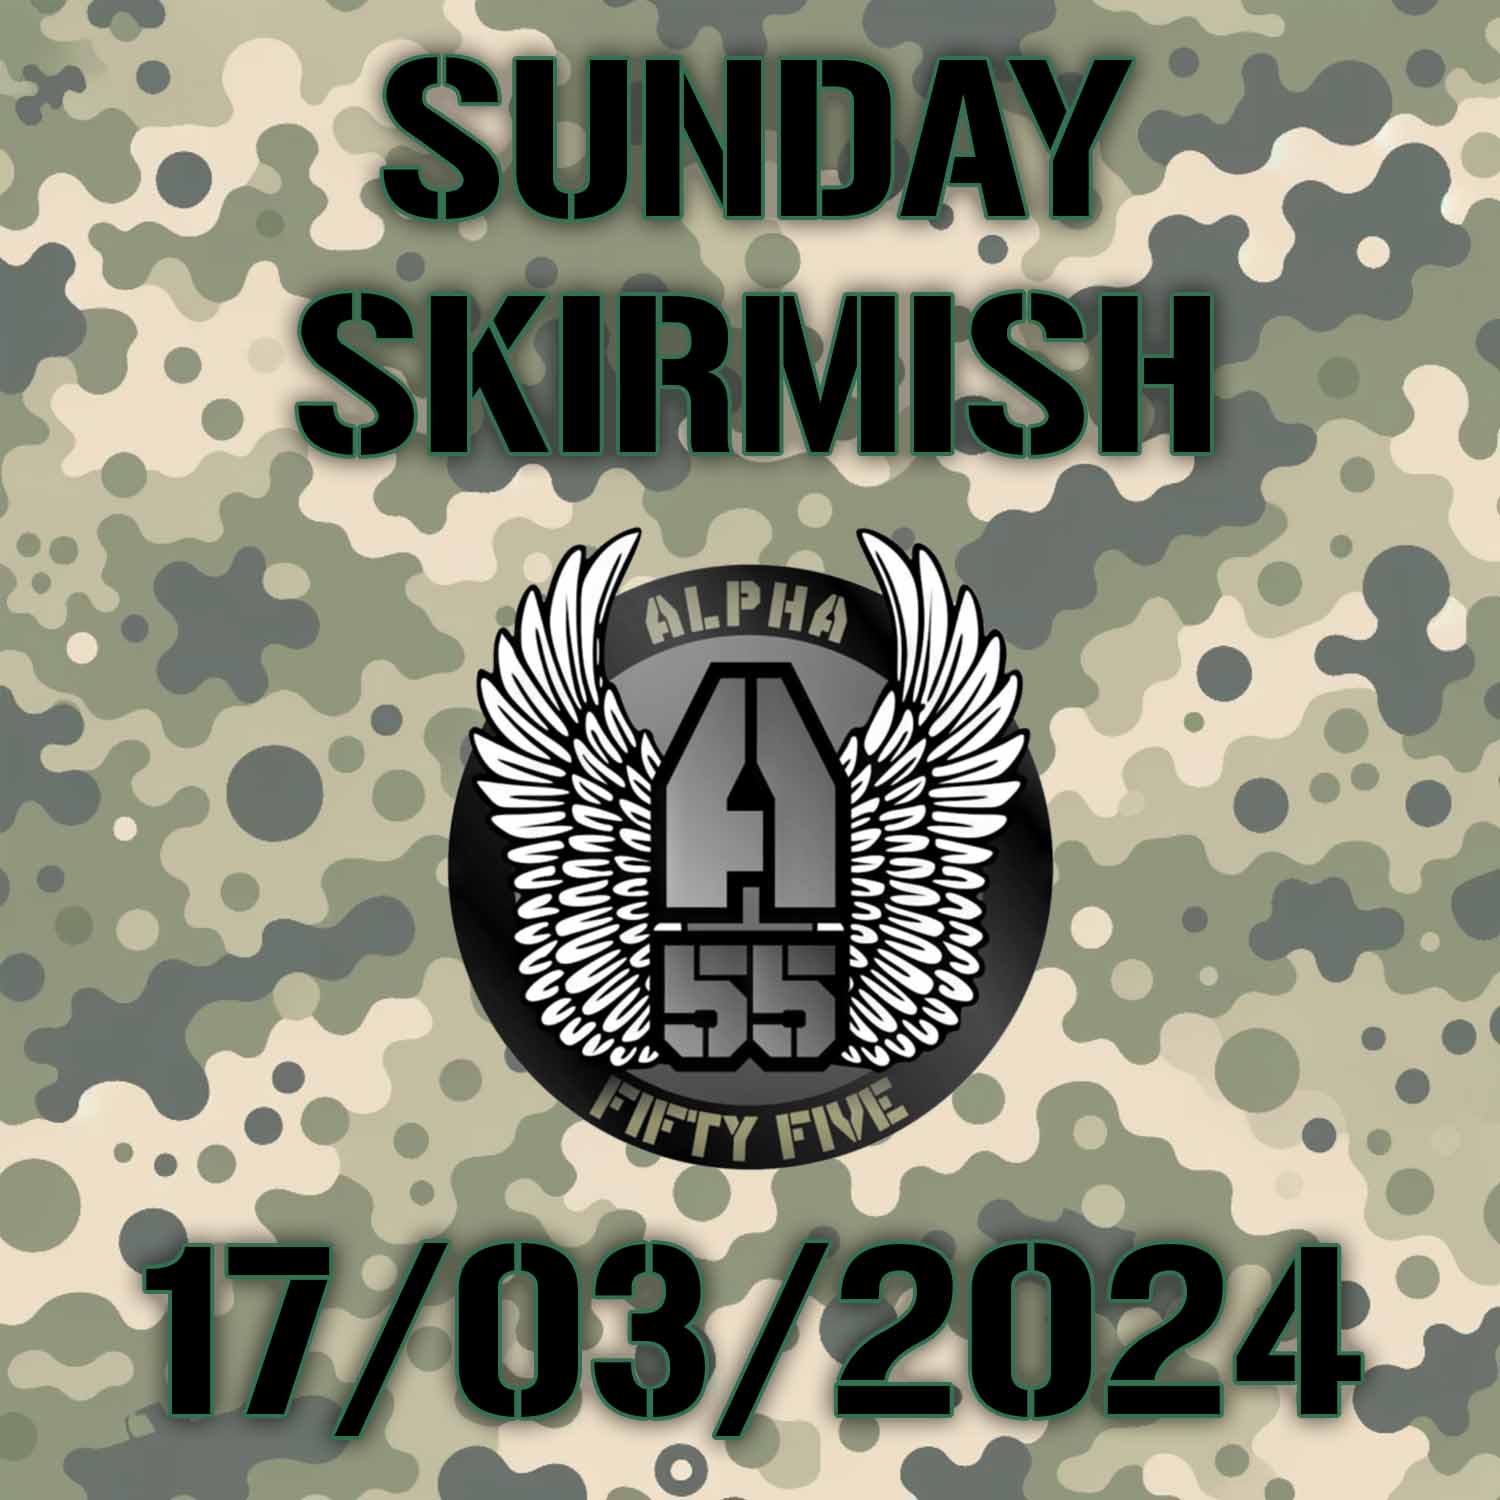 Sunday 'Skirmish' - 17/03/2024